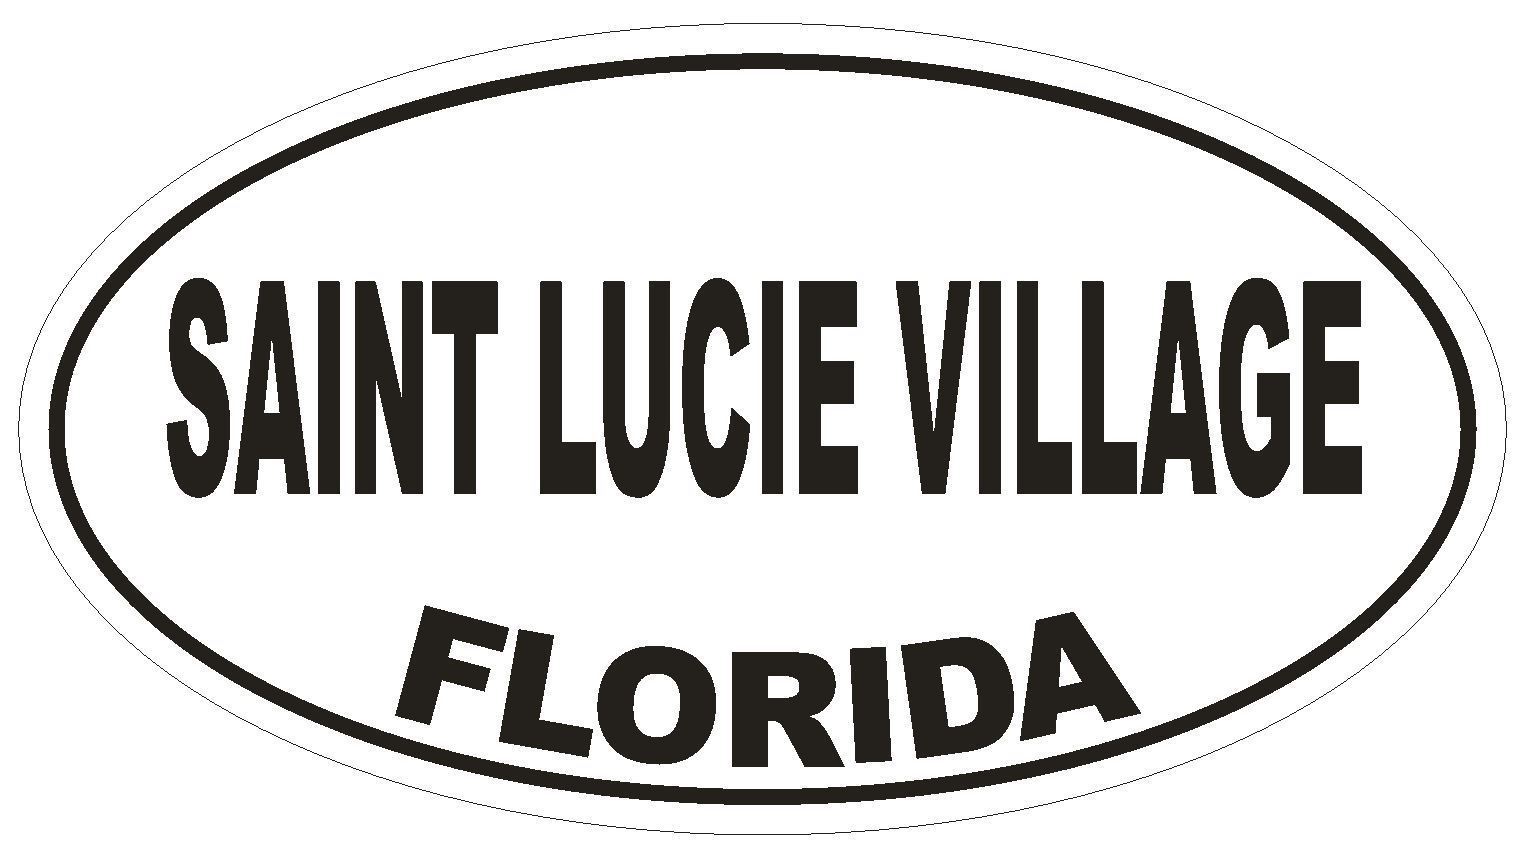 Saint Lucie Village Florida Oval Bumper Sticker or Helmet Sticker D2710 Decal - $1.39 - $75.00